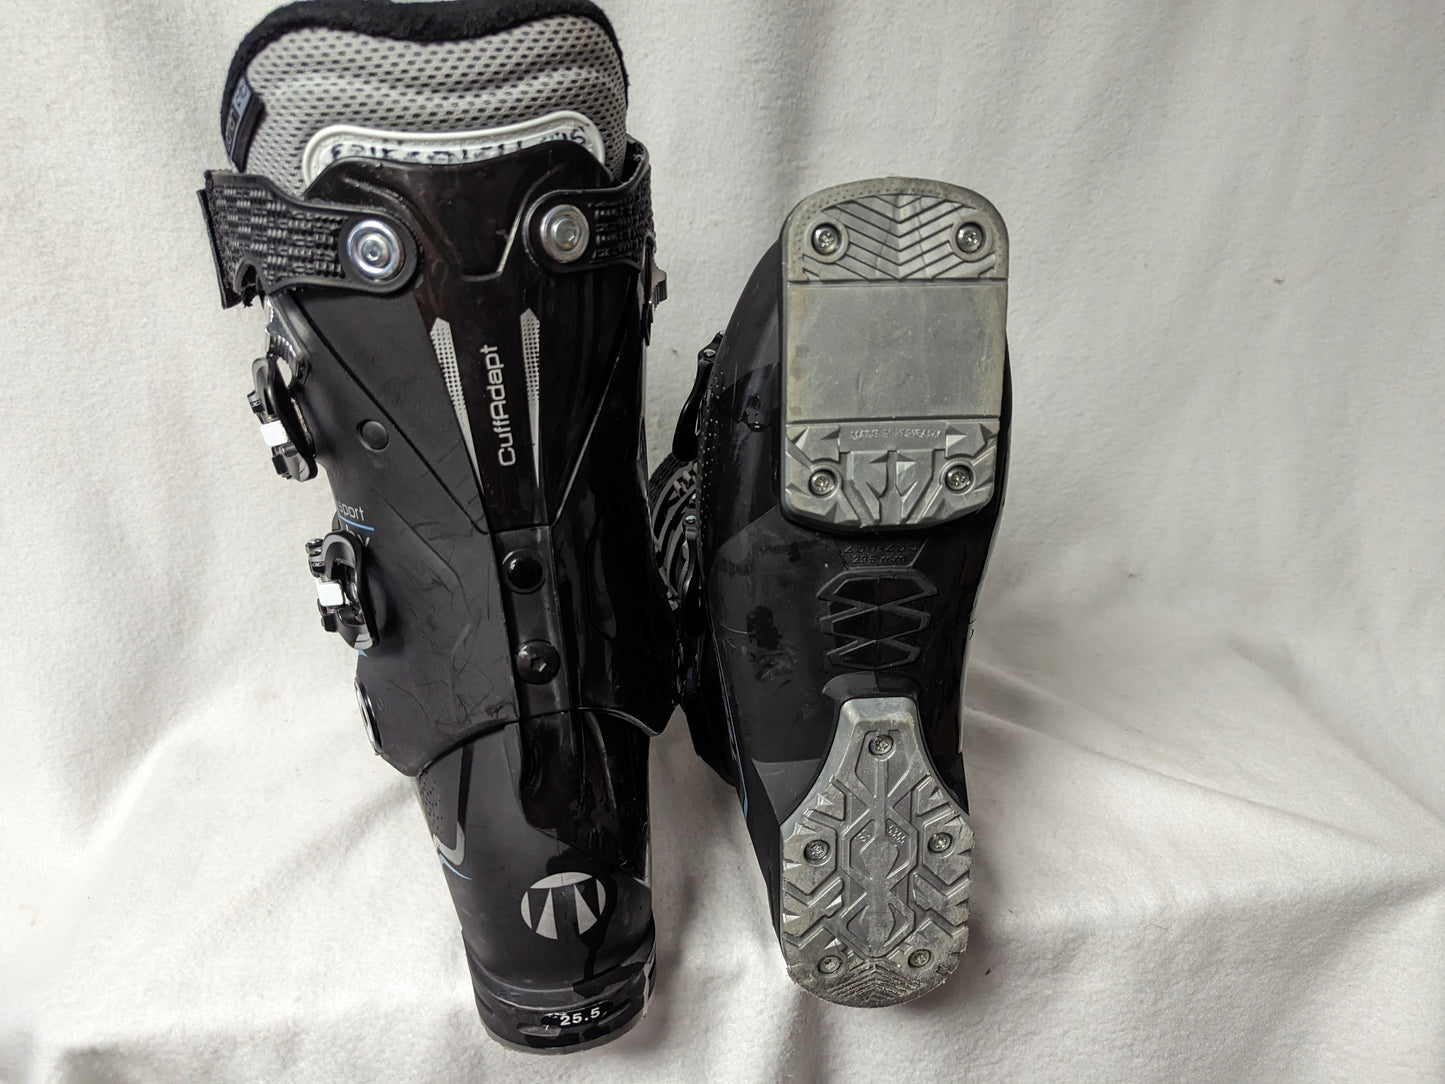 Tecnica Women's Mach Sport Ski Boots Size 25.5 Color Black Condition Used